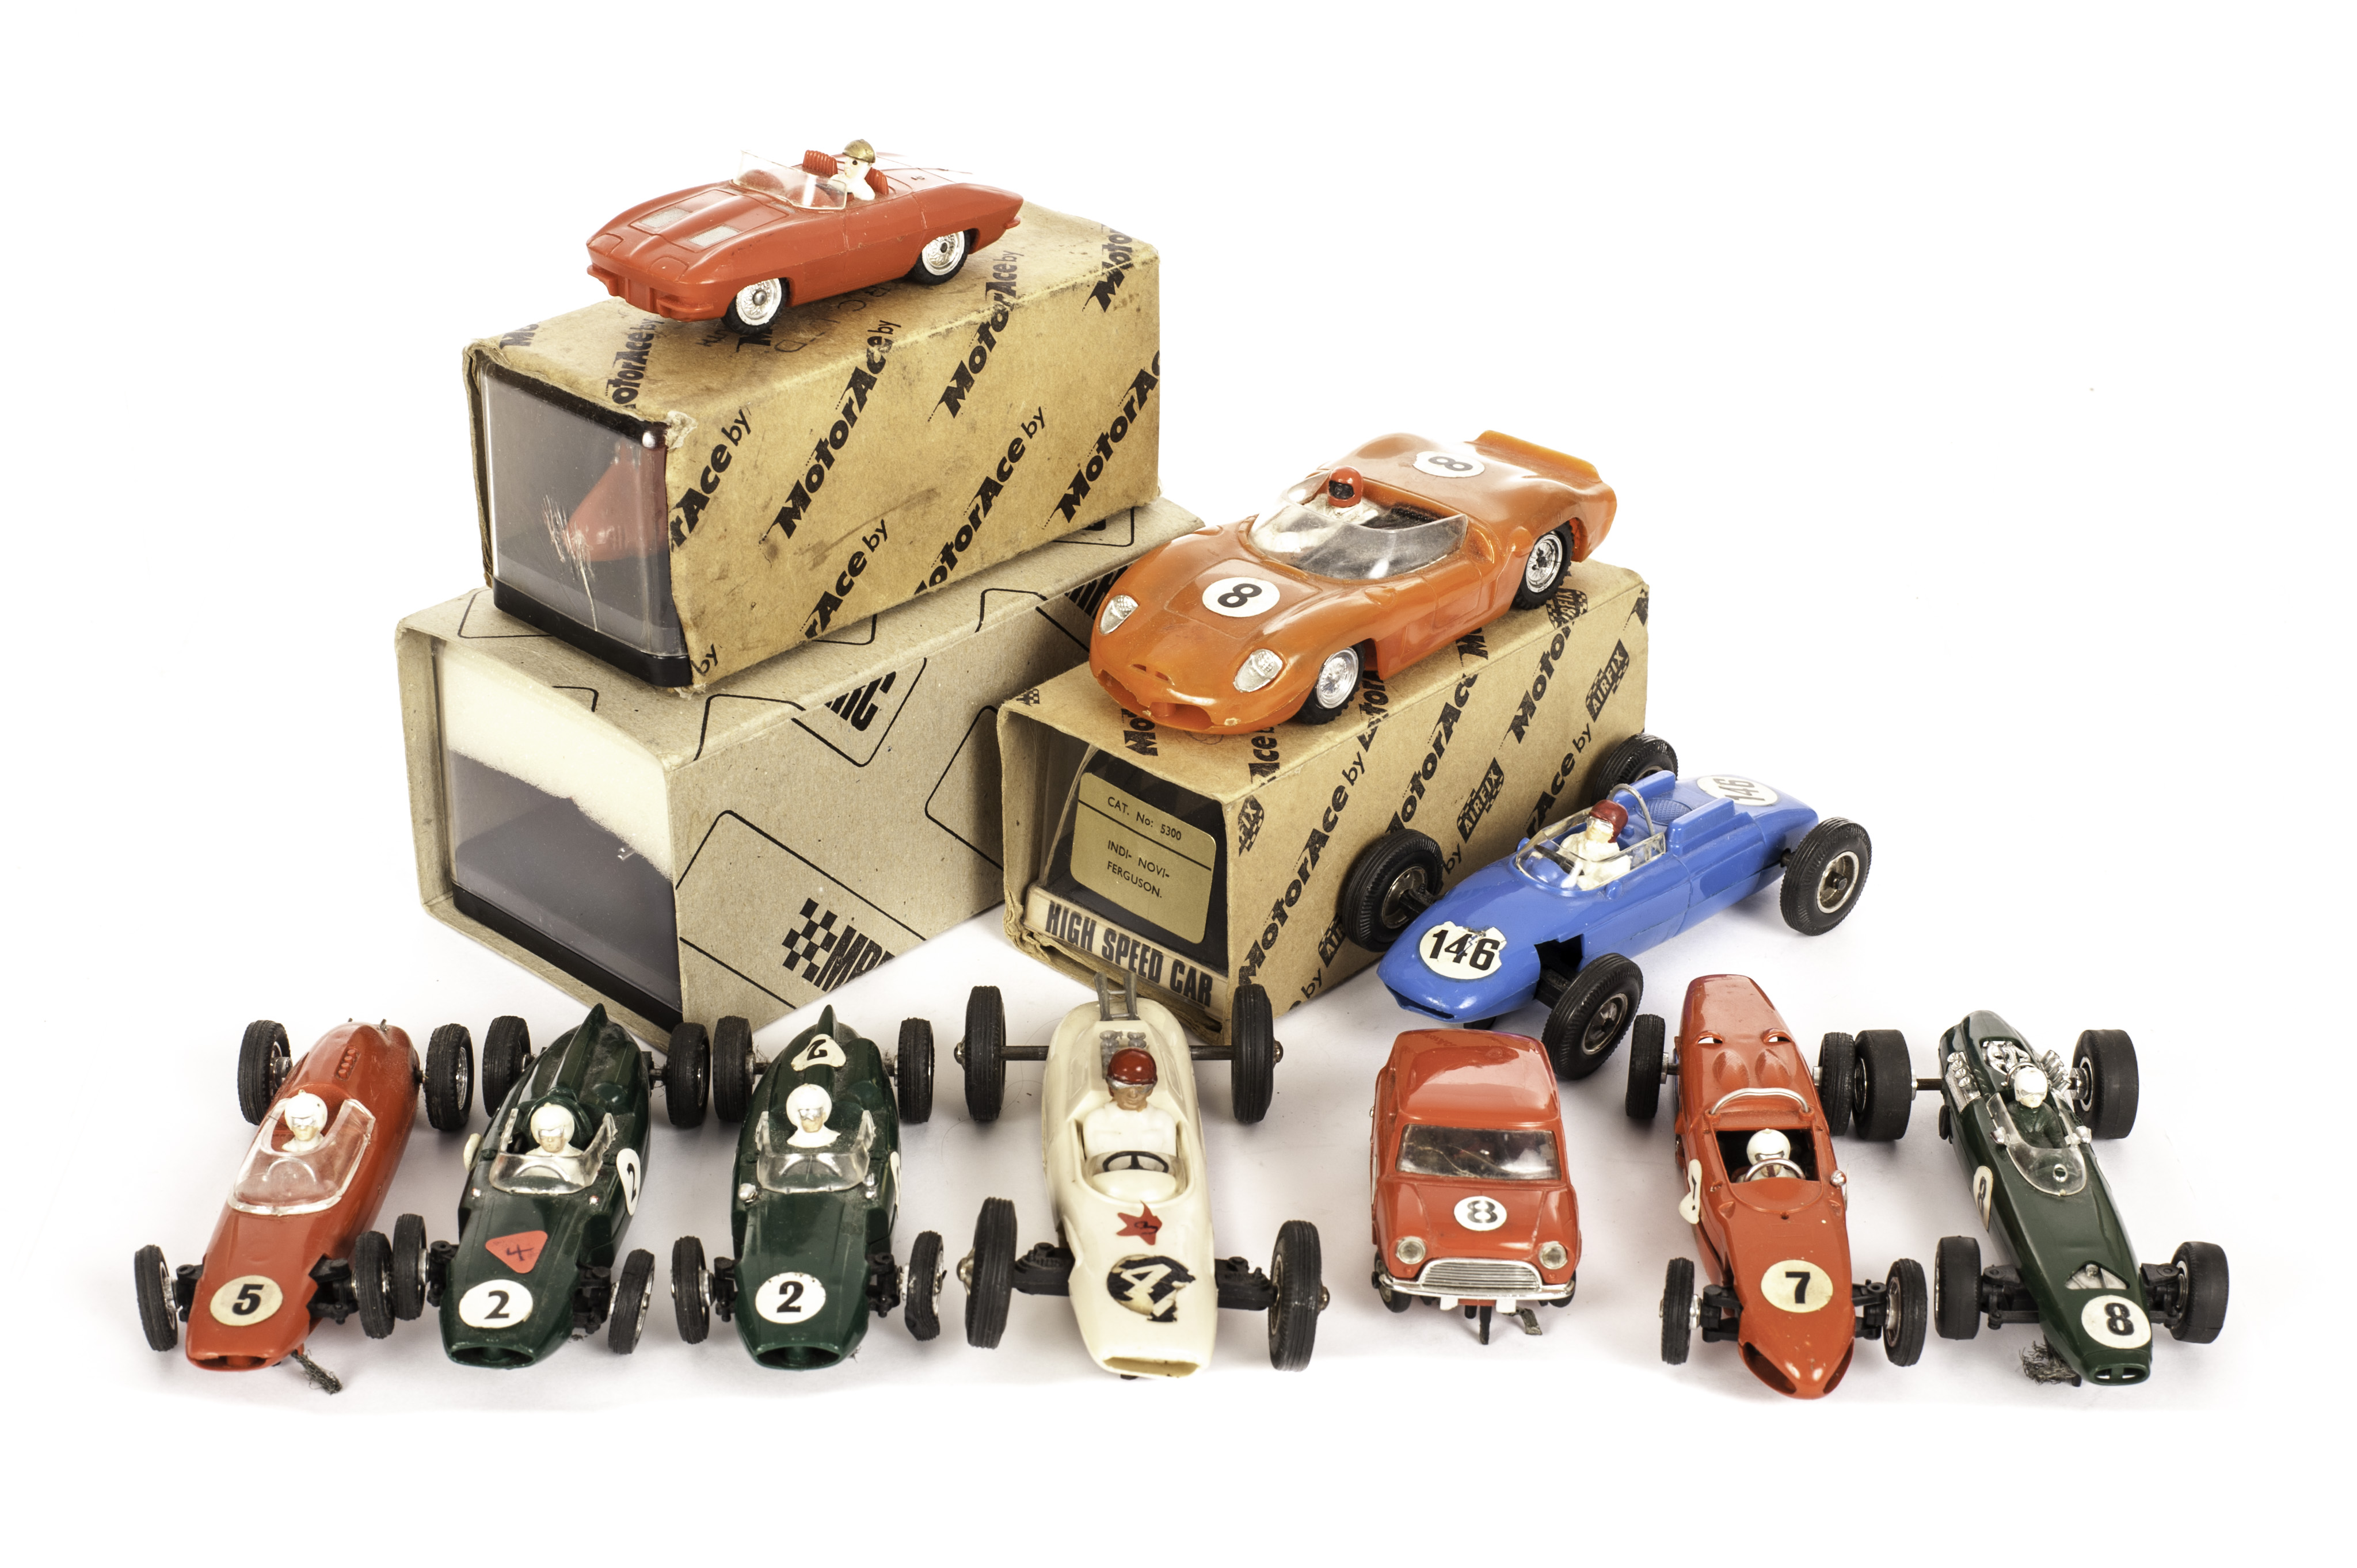 Slot Racing Cars, Airfix/M.R.R.C Ferrari 312T, Maserati, in original boxes, loose SRM Mini, Marx